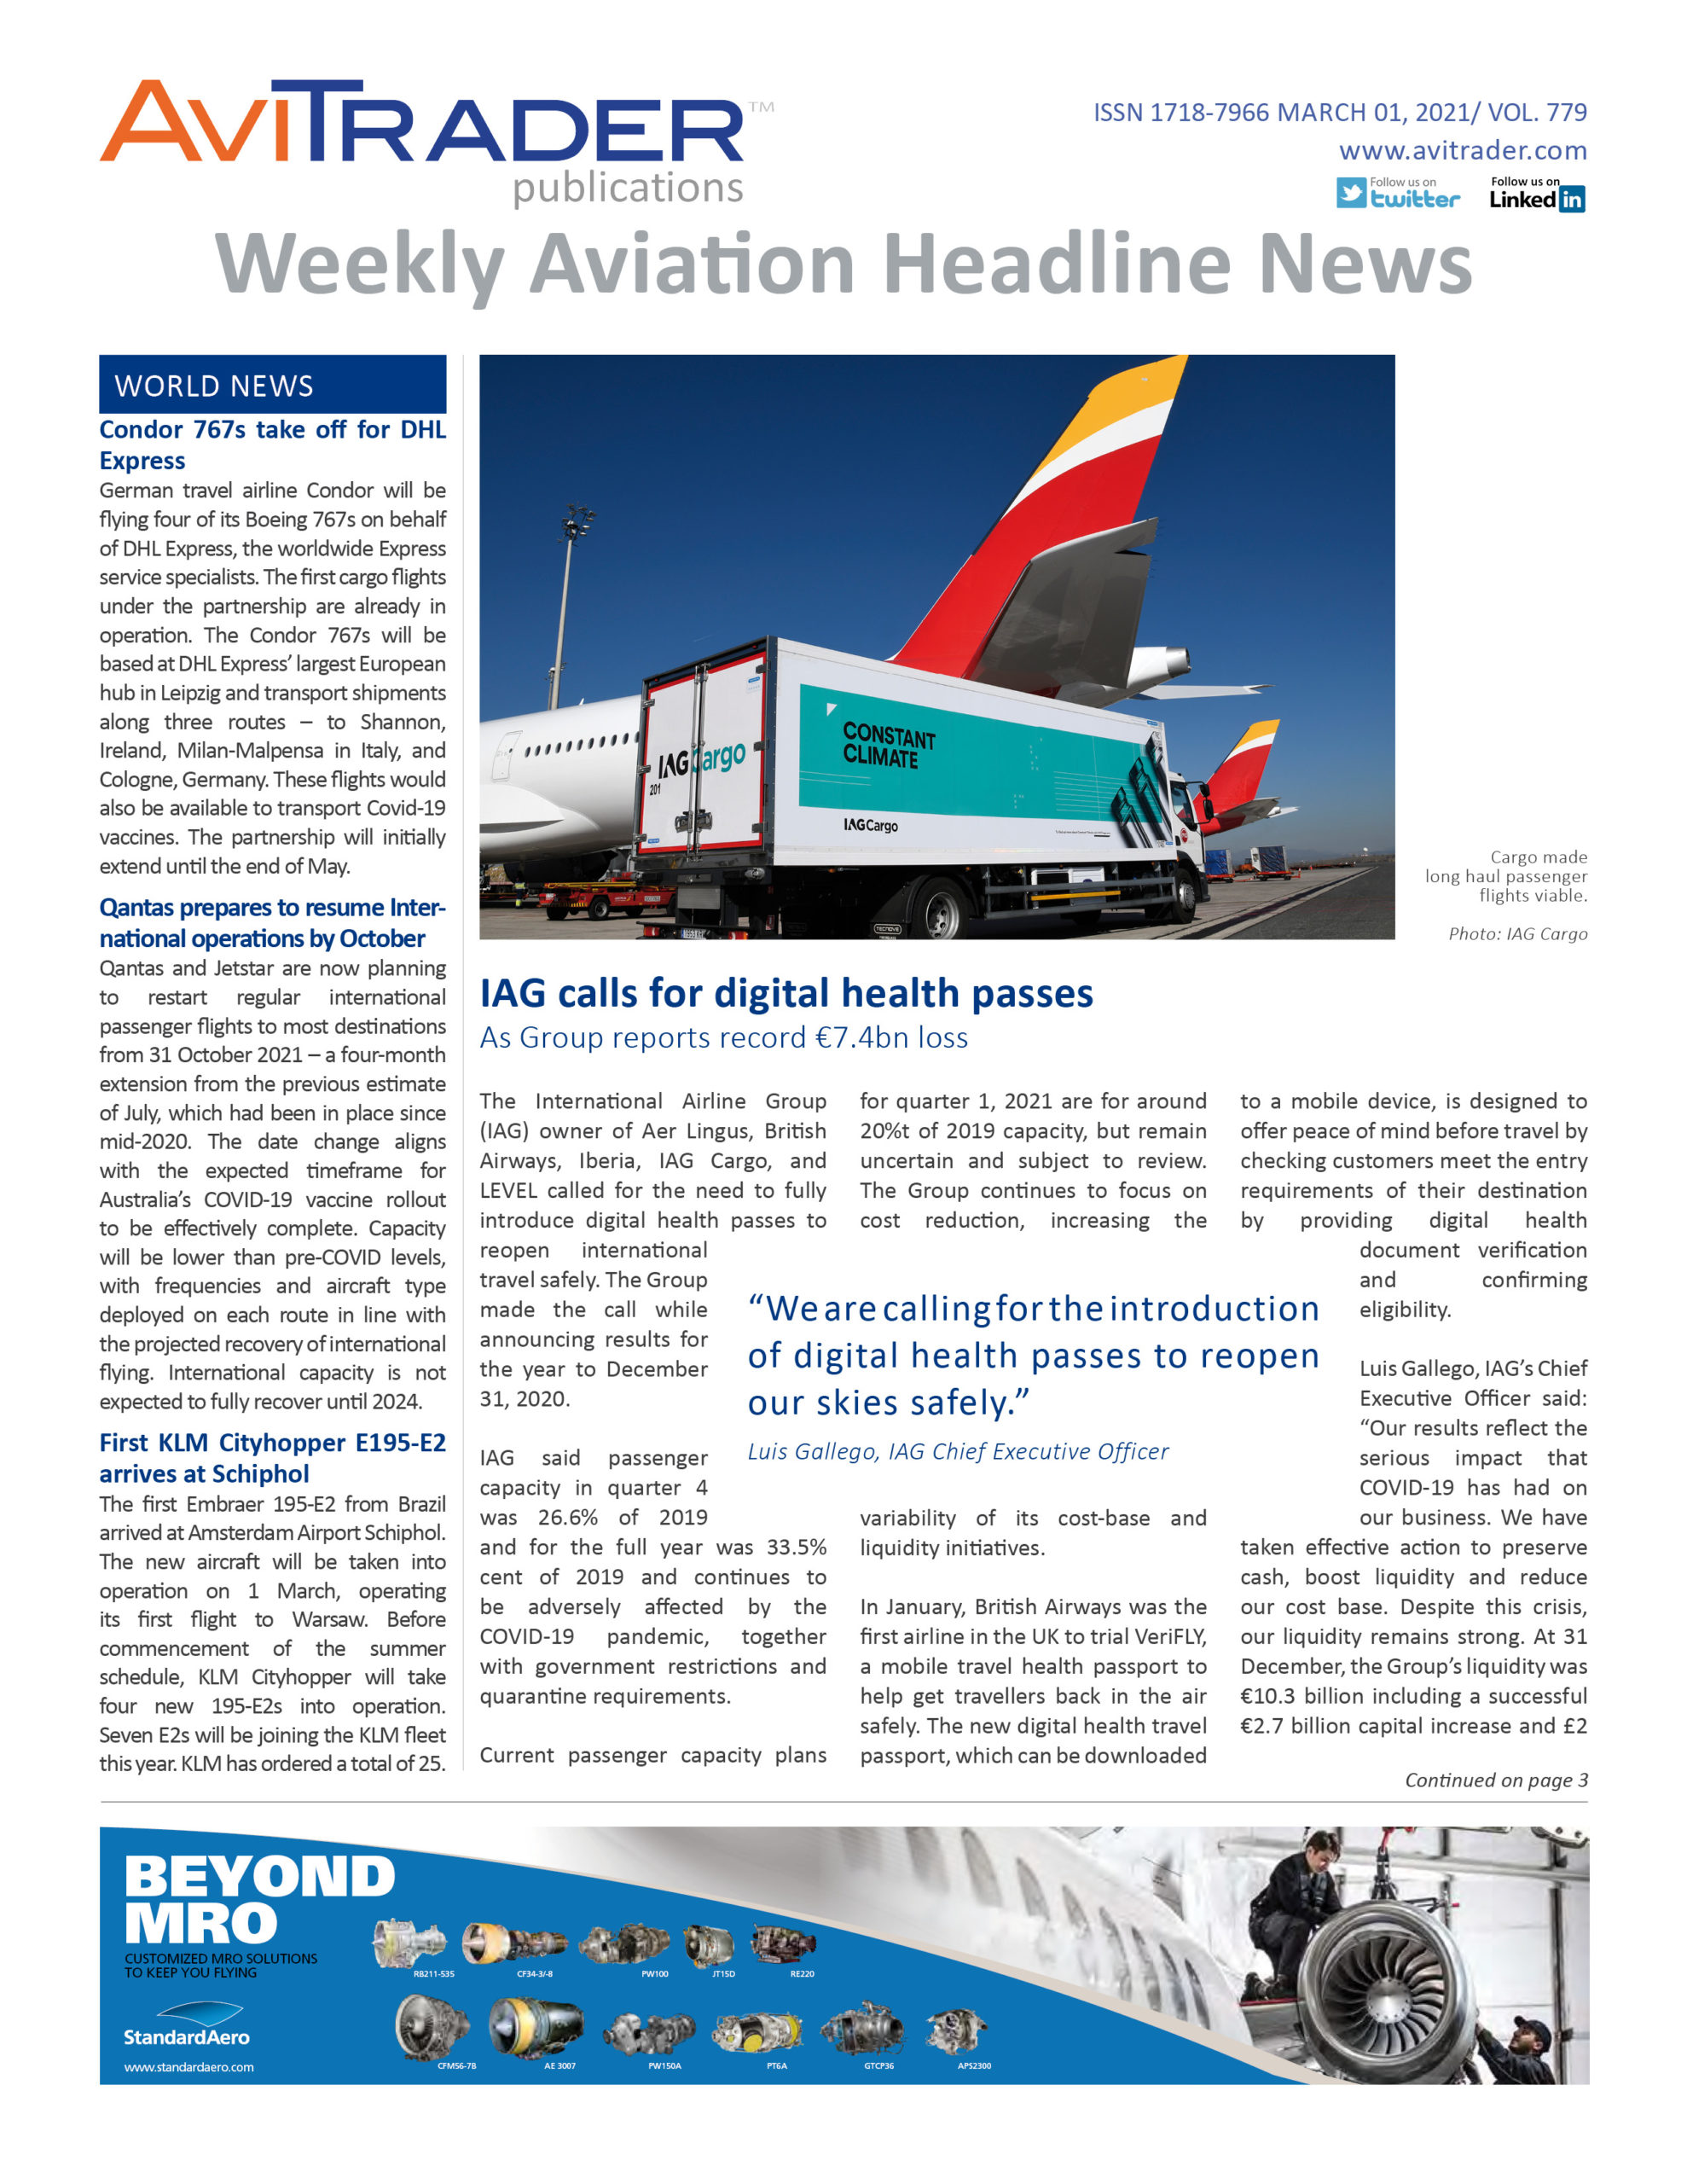 AviTrader_Weekly_Headline_News_Cover_2021-03-01